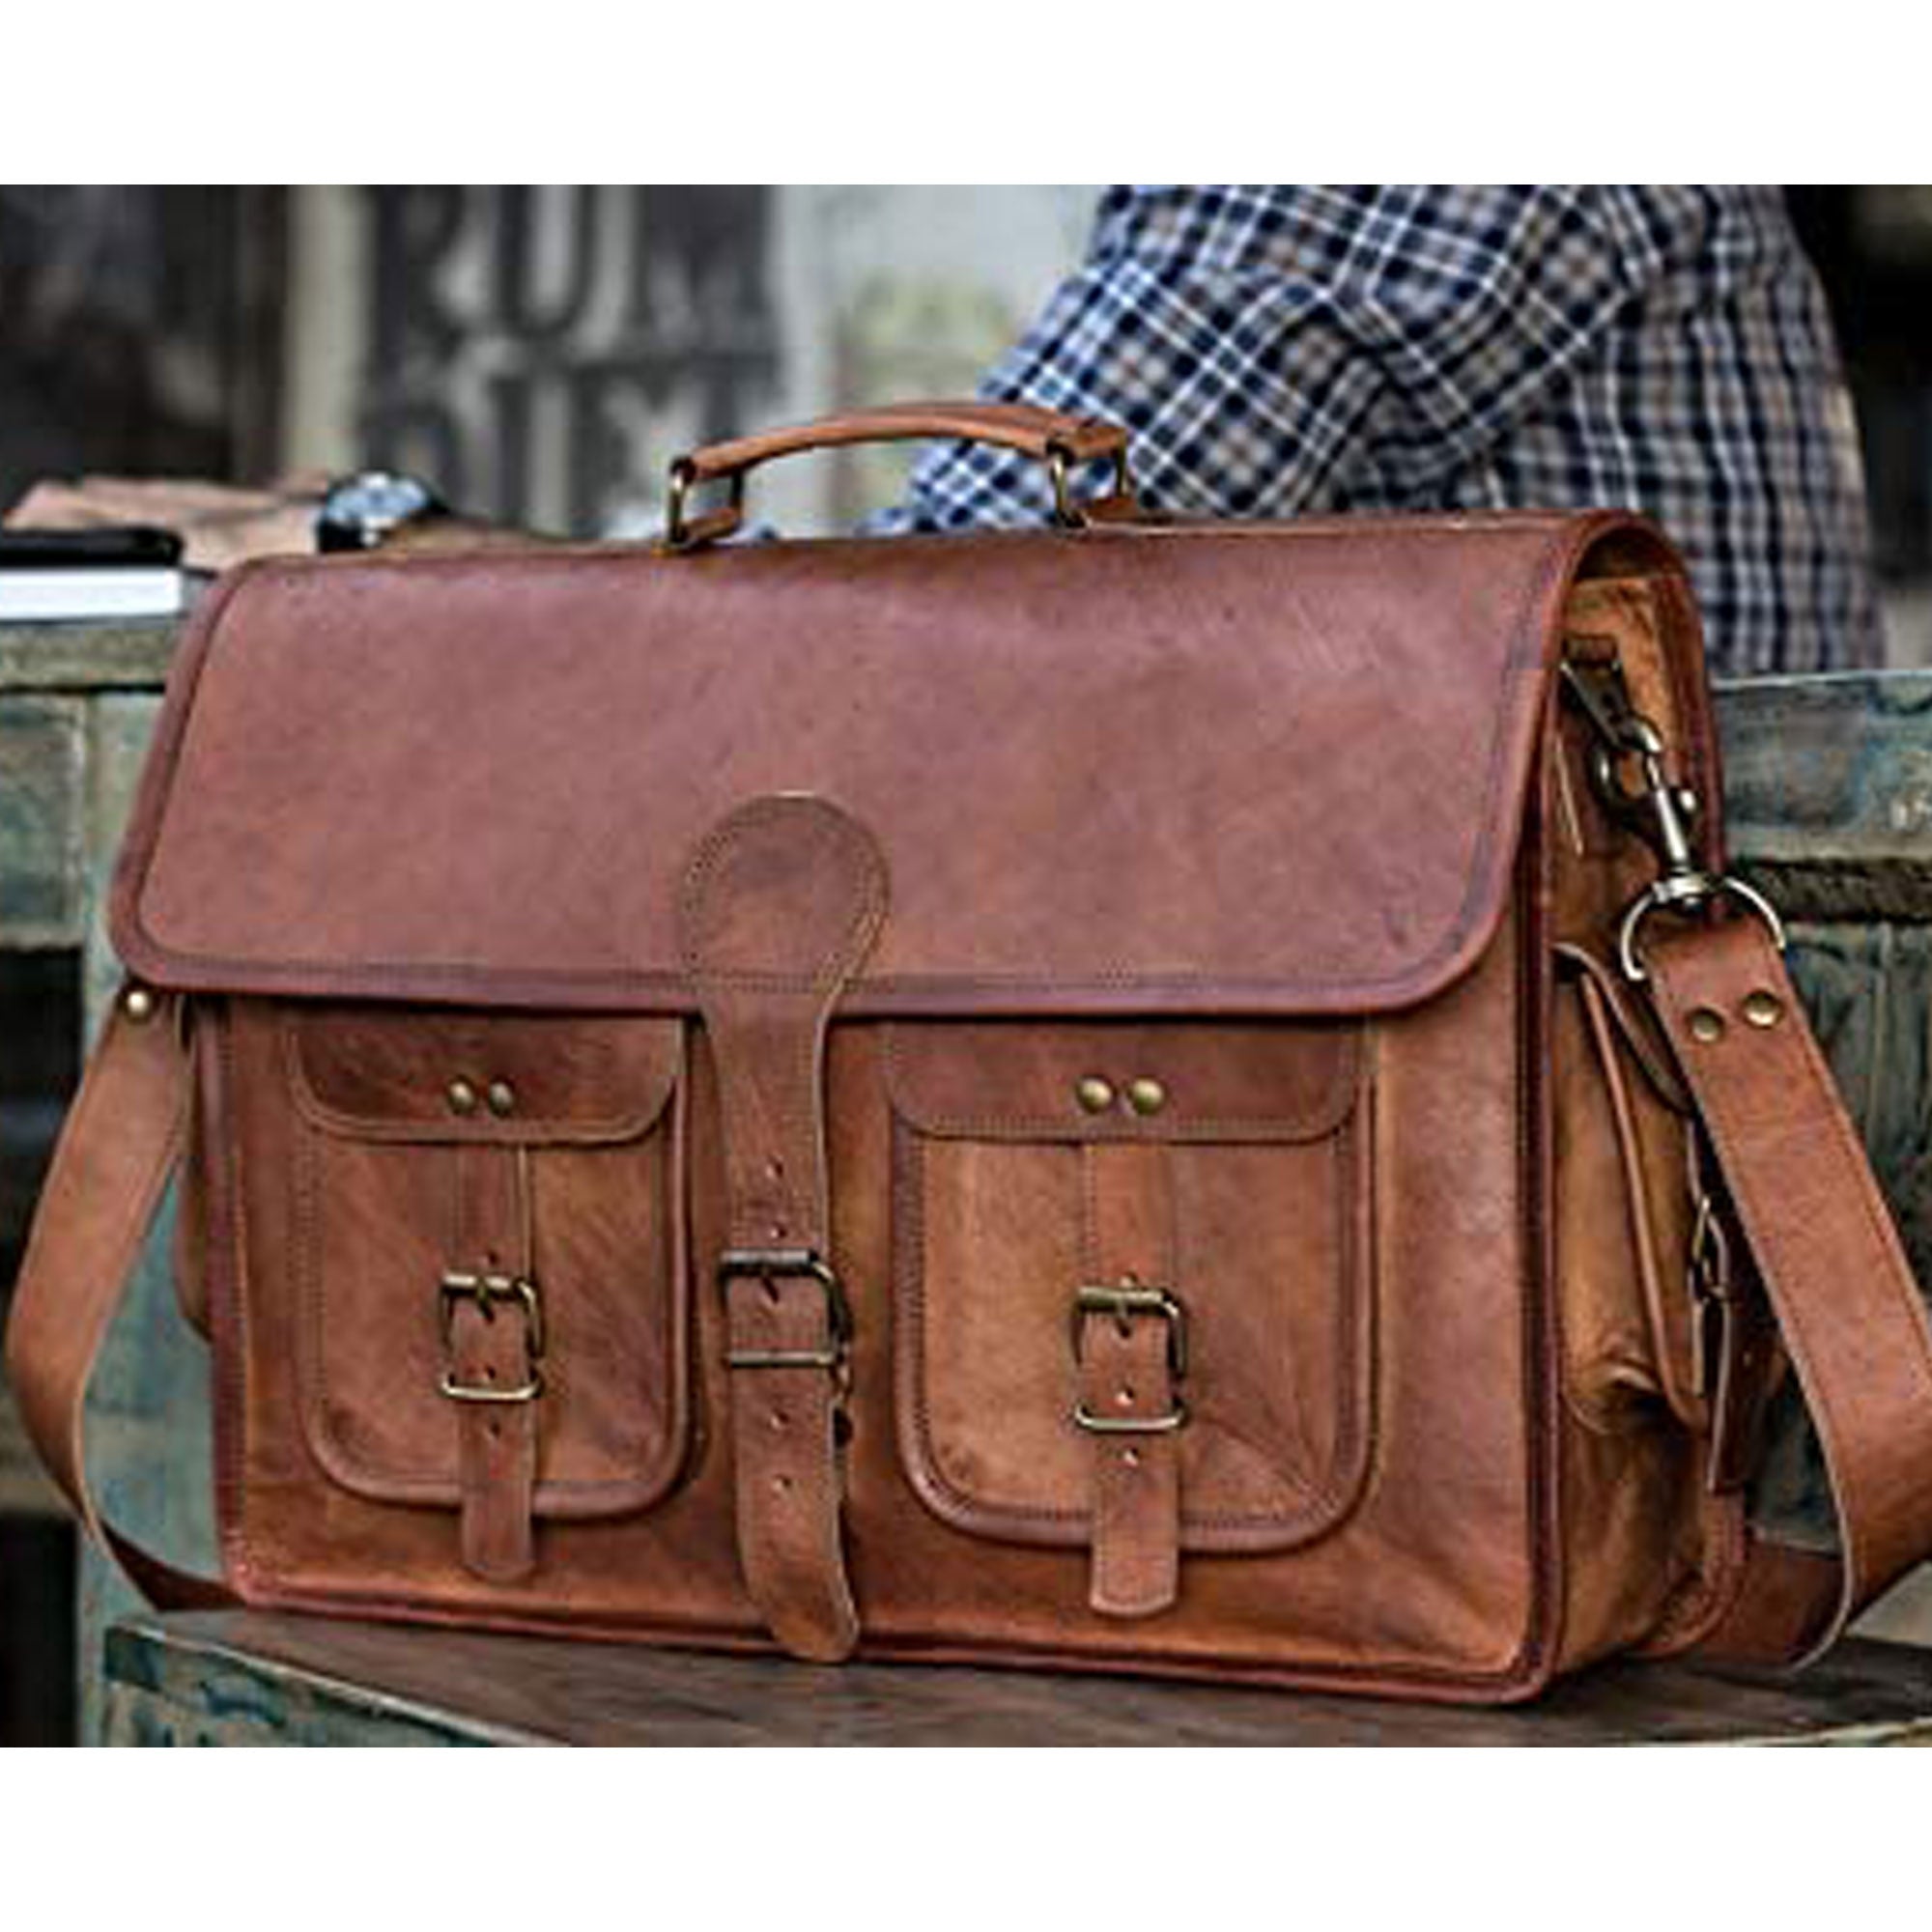 DHK 18 inch Vintage Handmade Leather Messenger Bag for Laptop Briefcase Best Computer